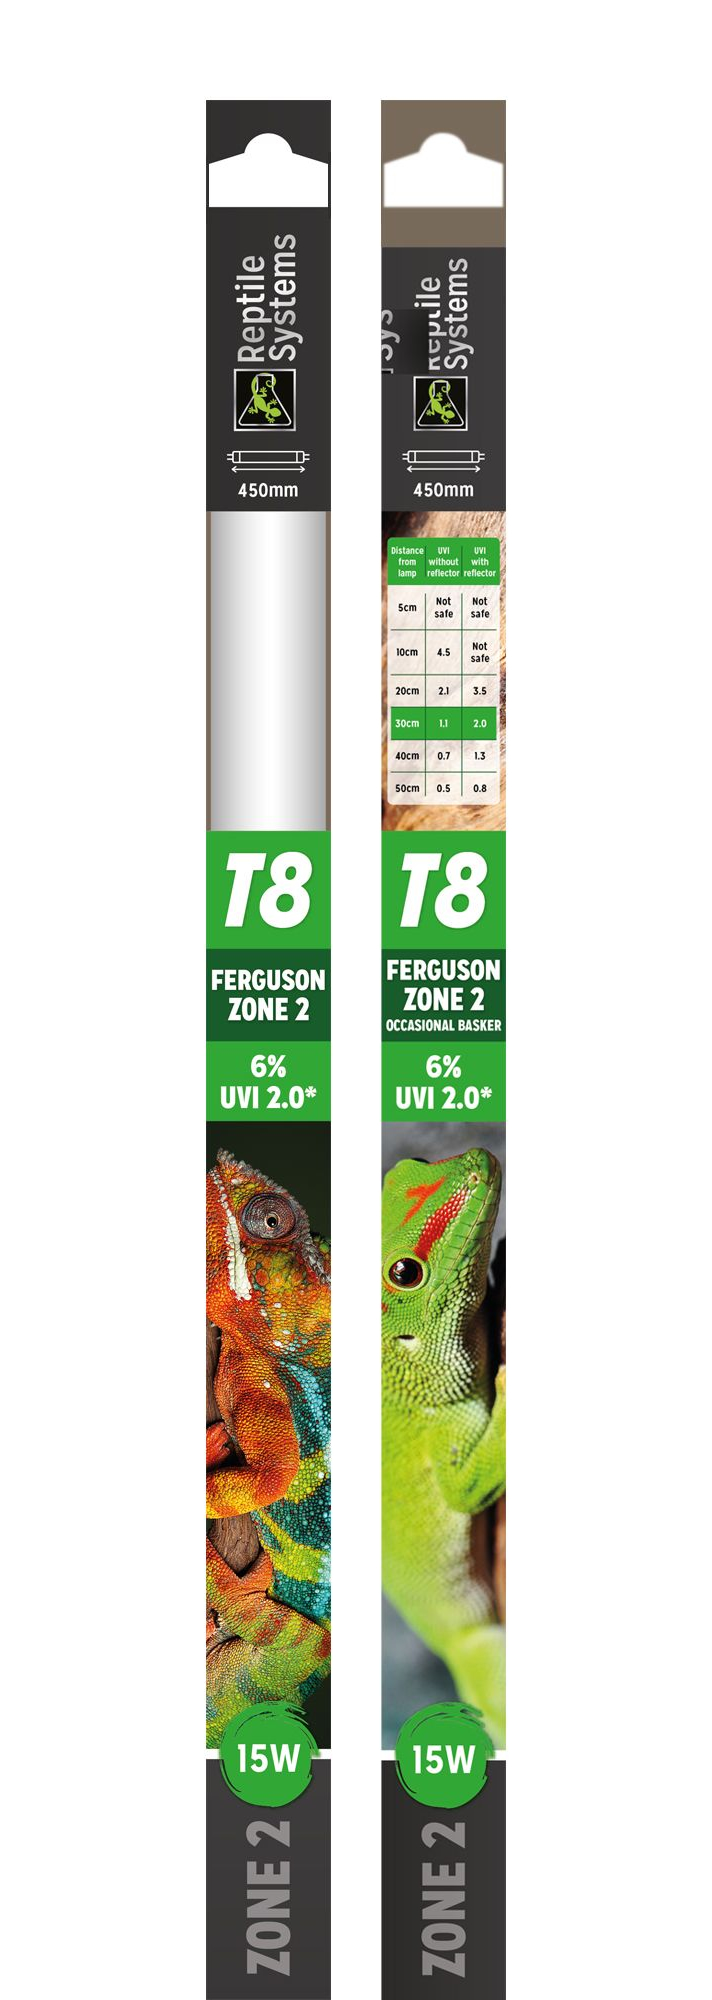 15-38W Reptile Lamp T8, Ferguson Zone 2 - UVB 6% 